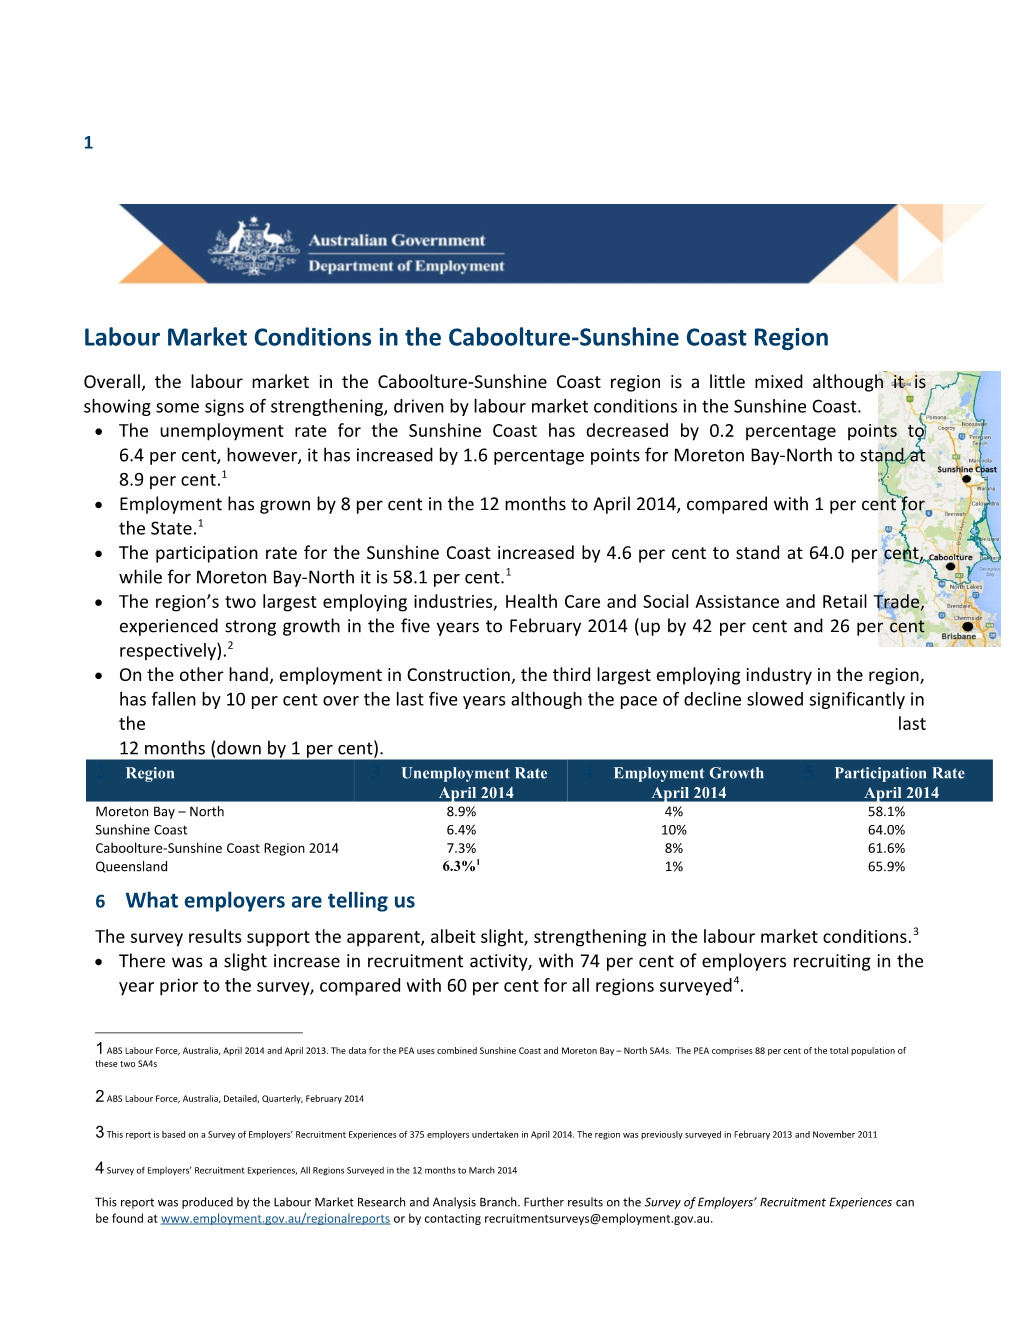 Labour Market Conditions in the Caboolture-Sunshine Coastregion